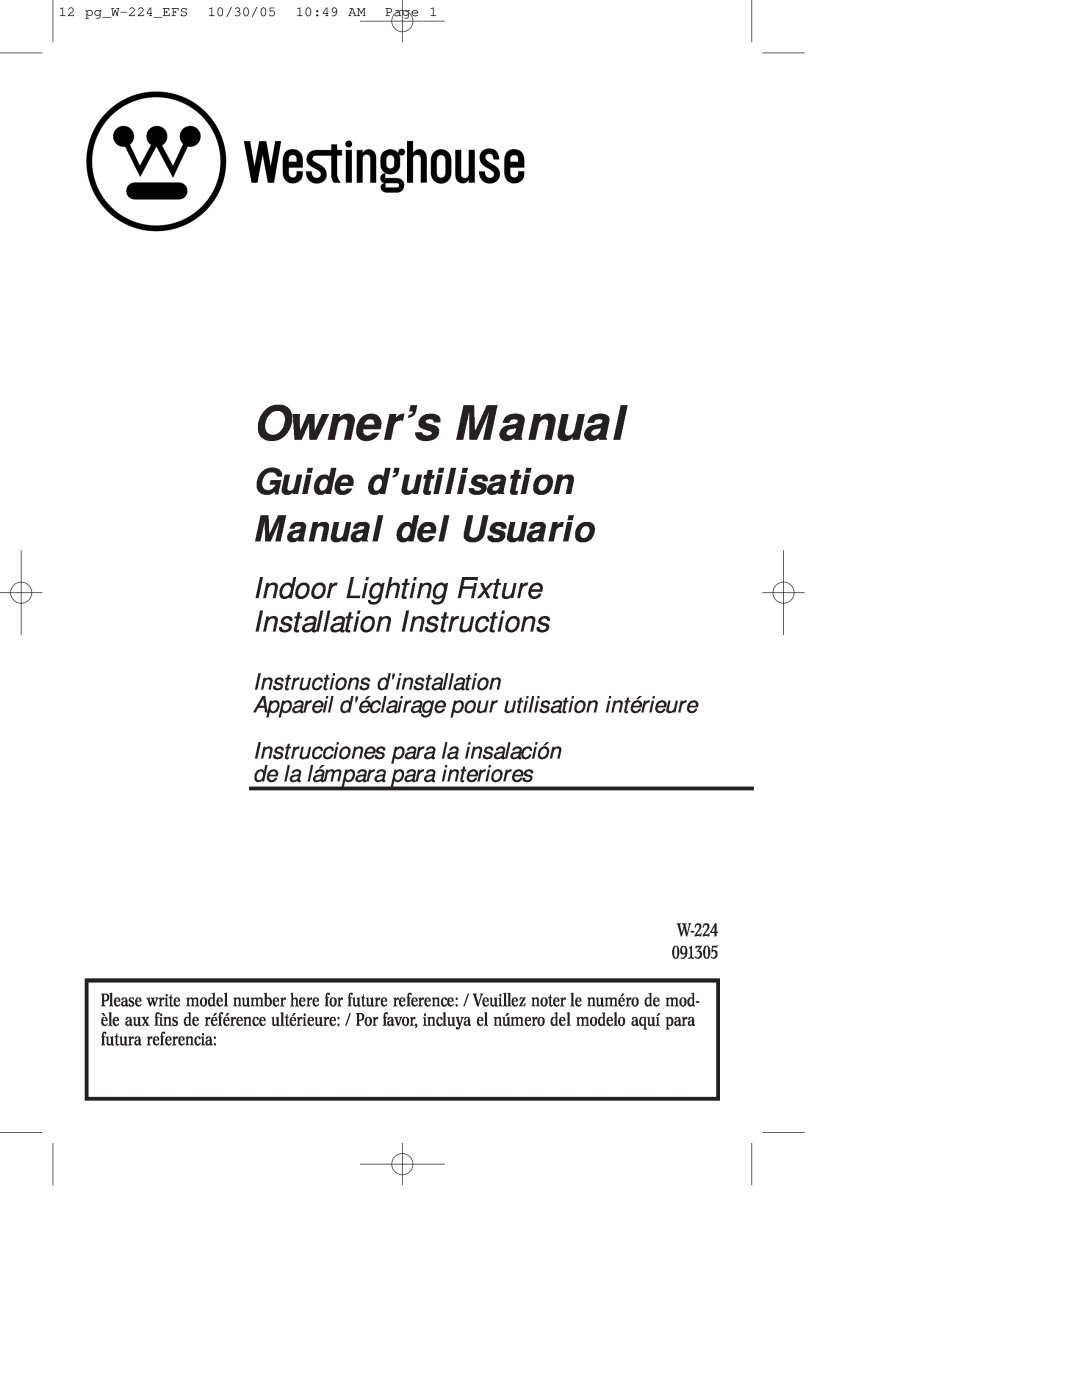 Westinghouse W-224 owner manual Guide d’utilisation Manual del Usuario, Indoor Lighting Fixture Installation Instructions 